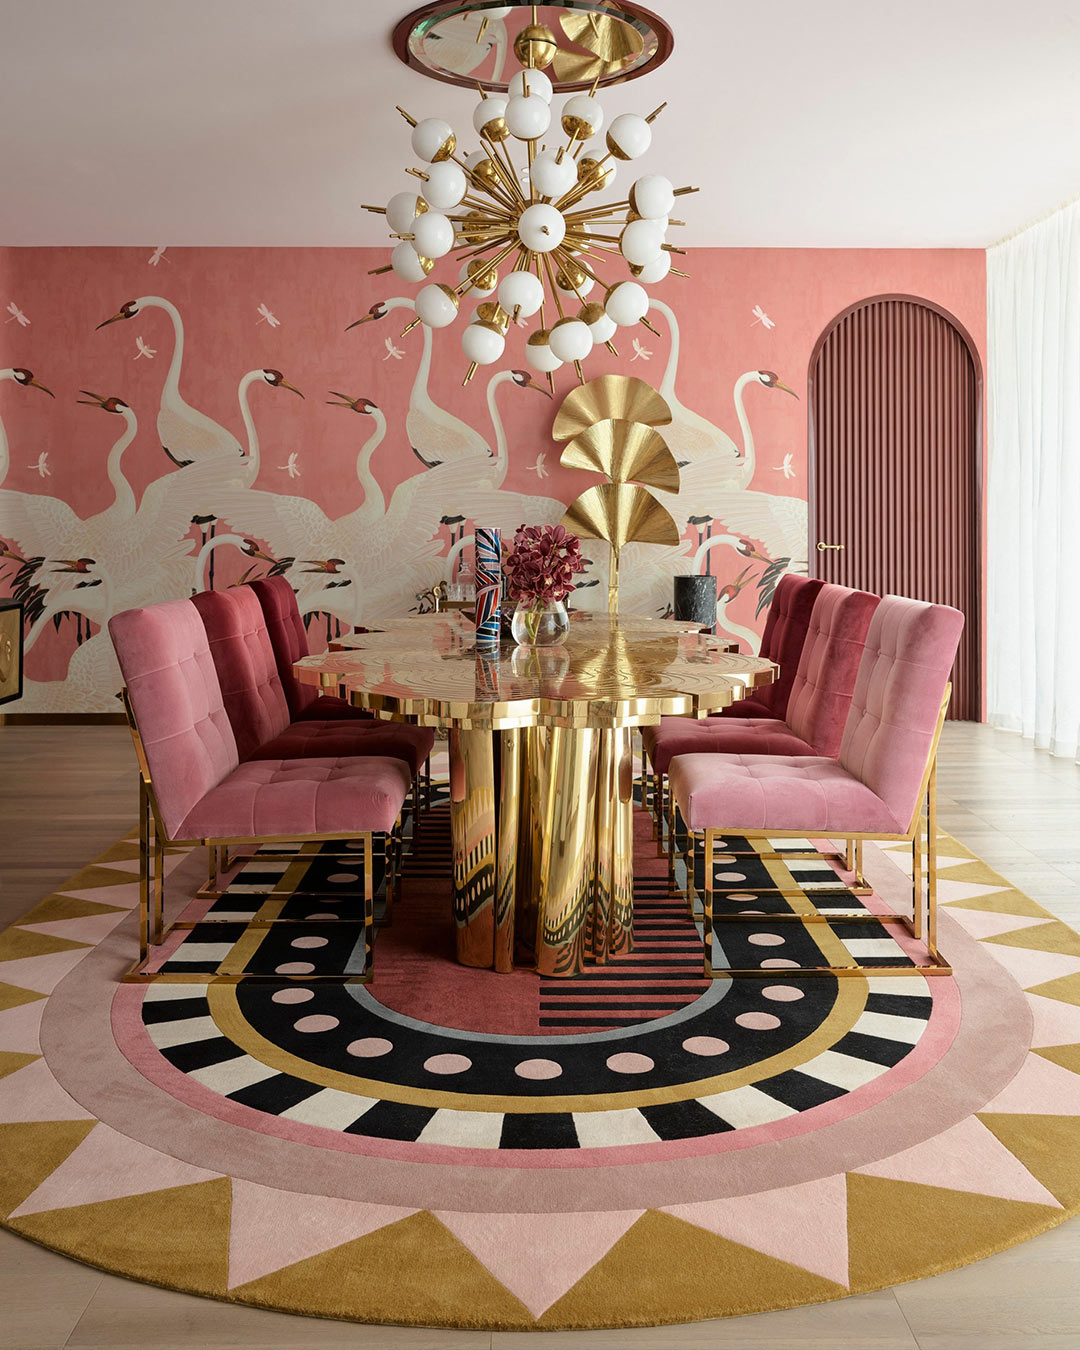 Dining room image of geometric Stella Diva rug by Greg Natale